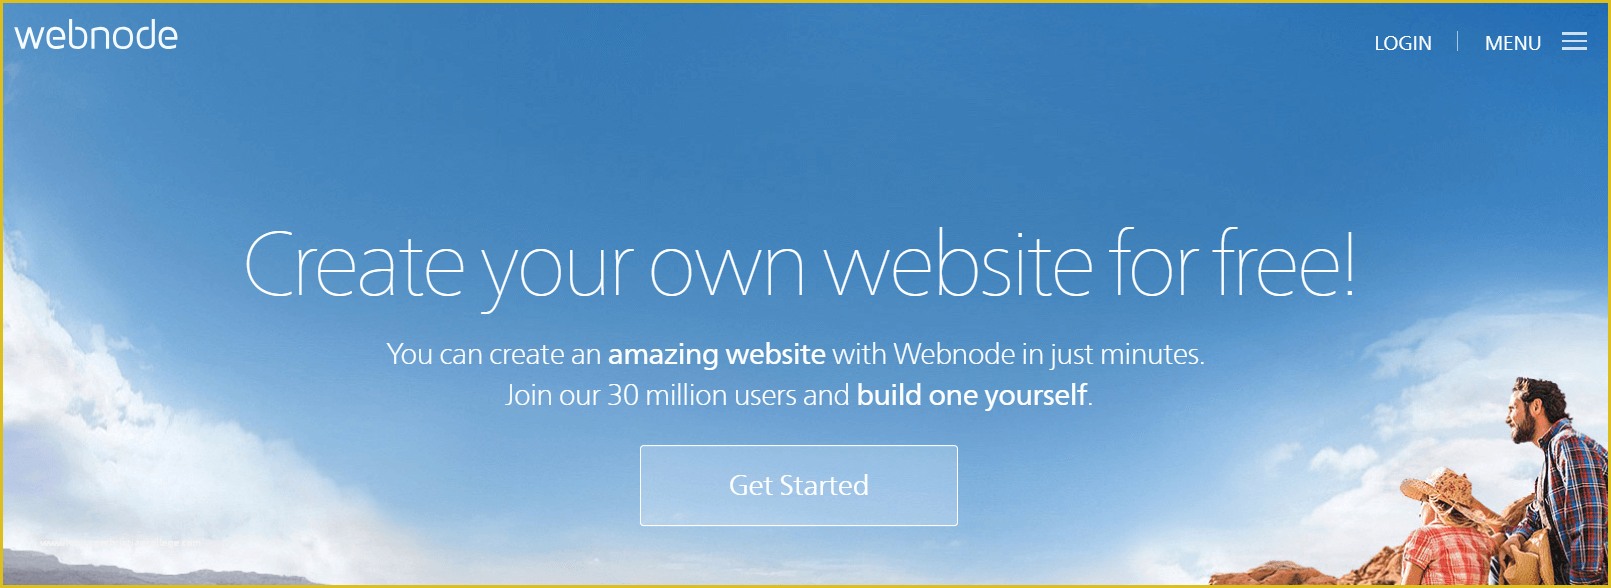 Webnode Free Templates Of 10 Sitebuilders Review – Netpeak software Blog